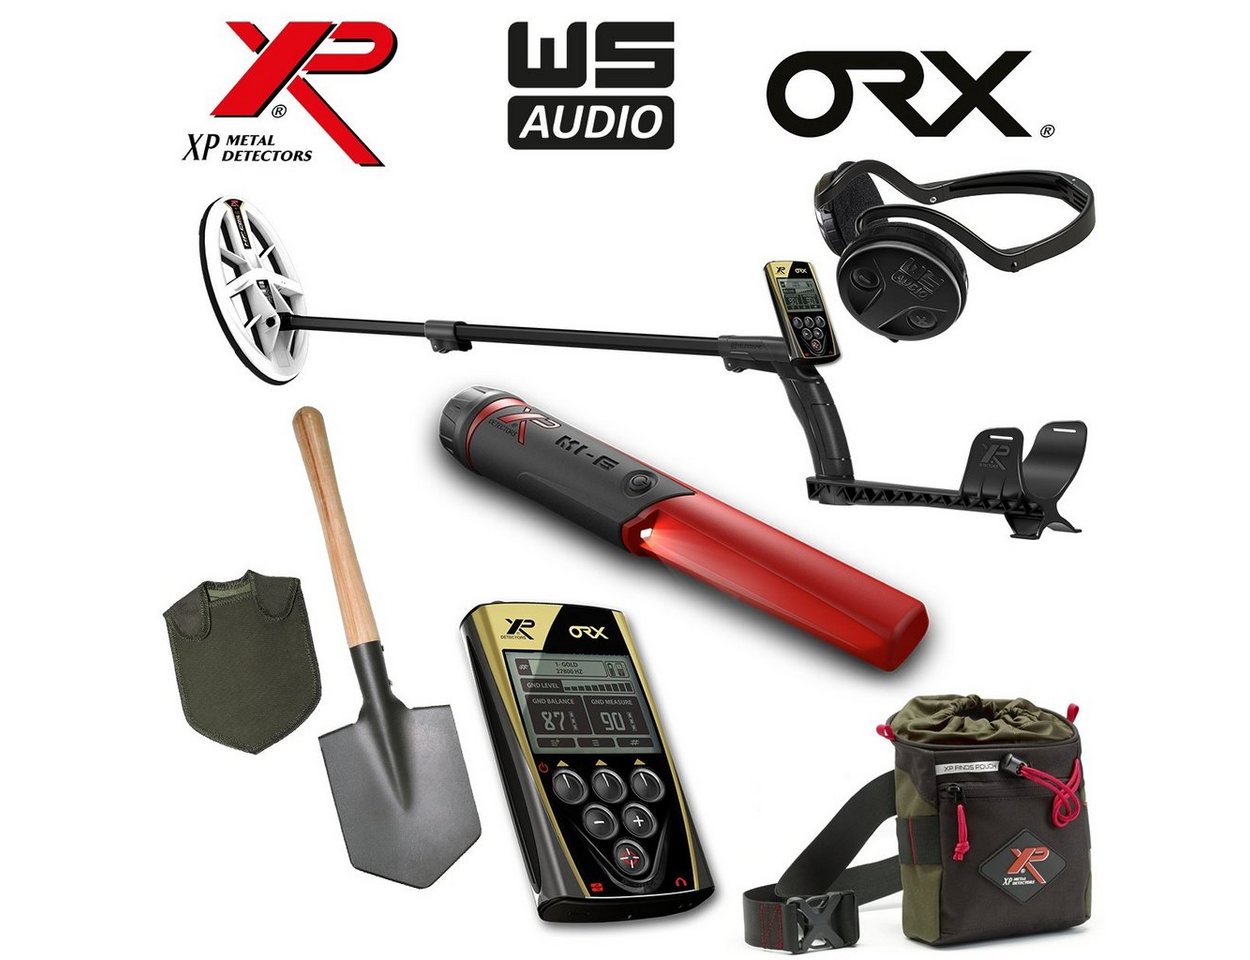 XP Metalldetektor XP ORX EL HF RC WS Audio Komplettset von XP